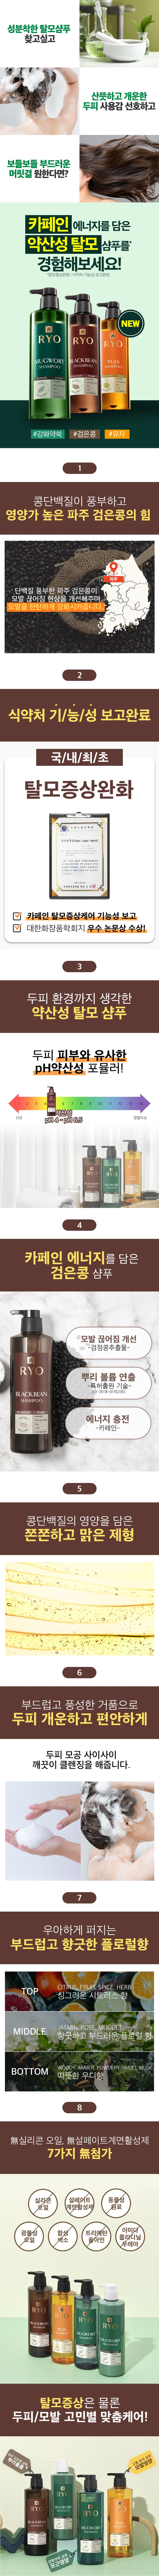 Ryo Black Bean Shampoo korean skincare product online shop malaysia China macau1